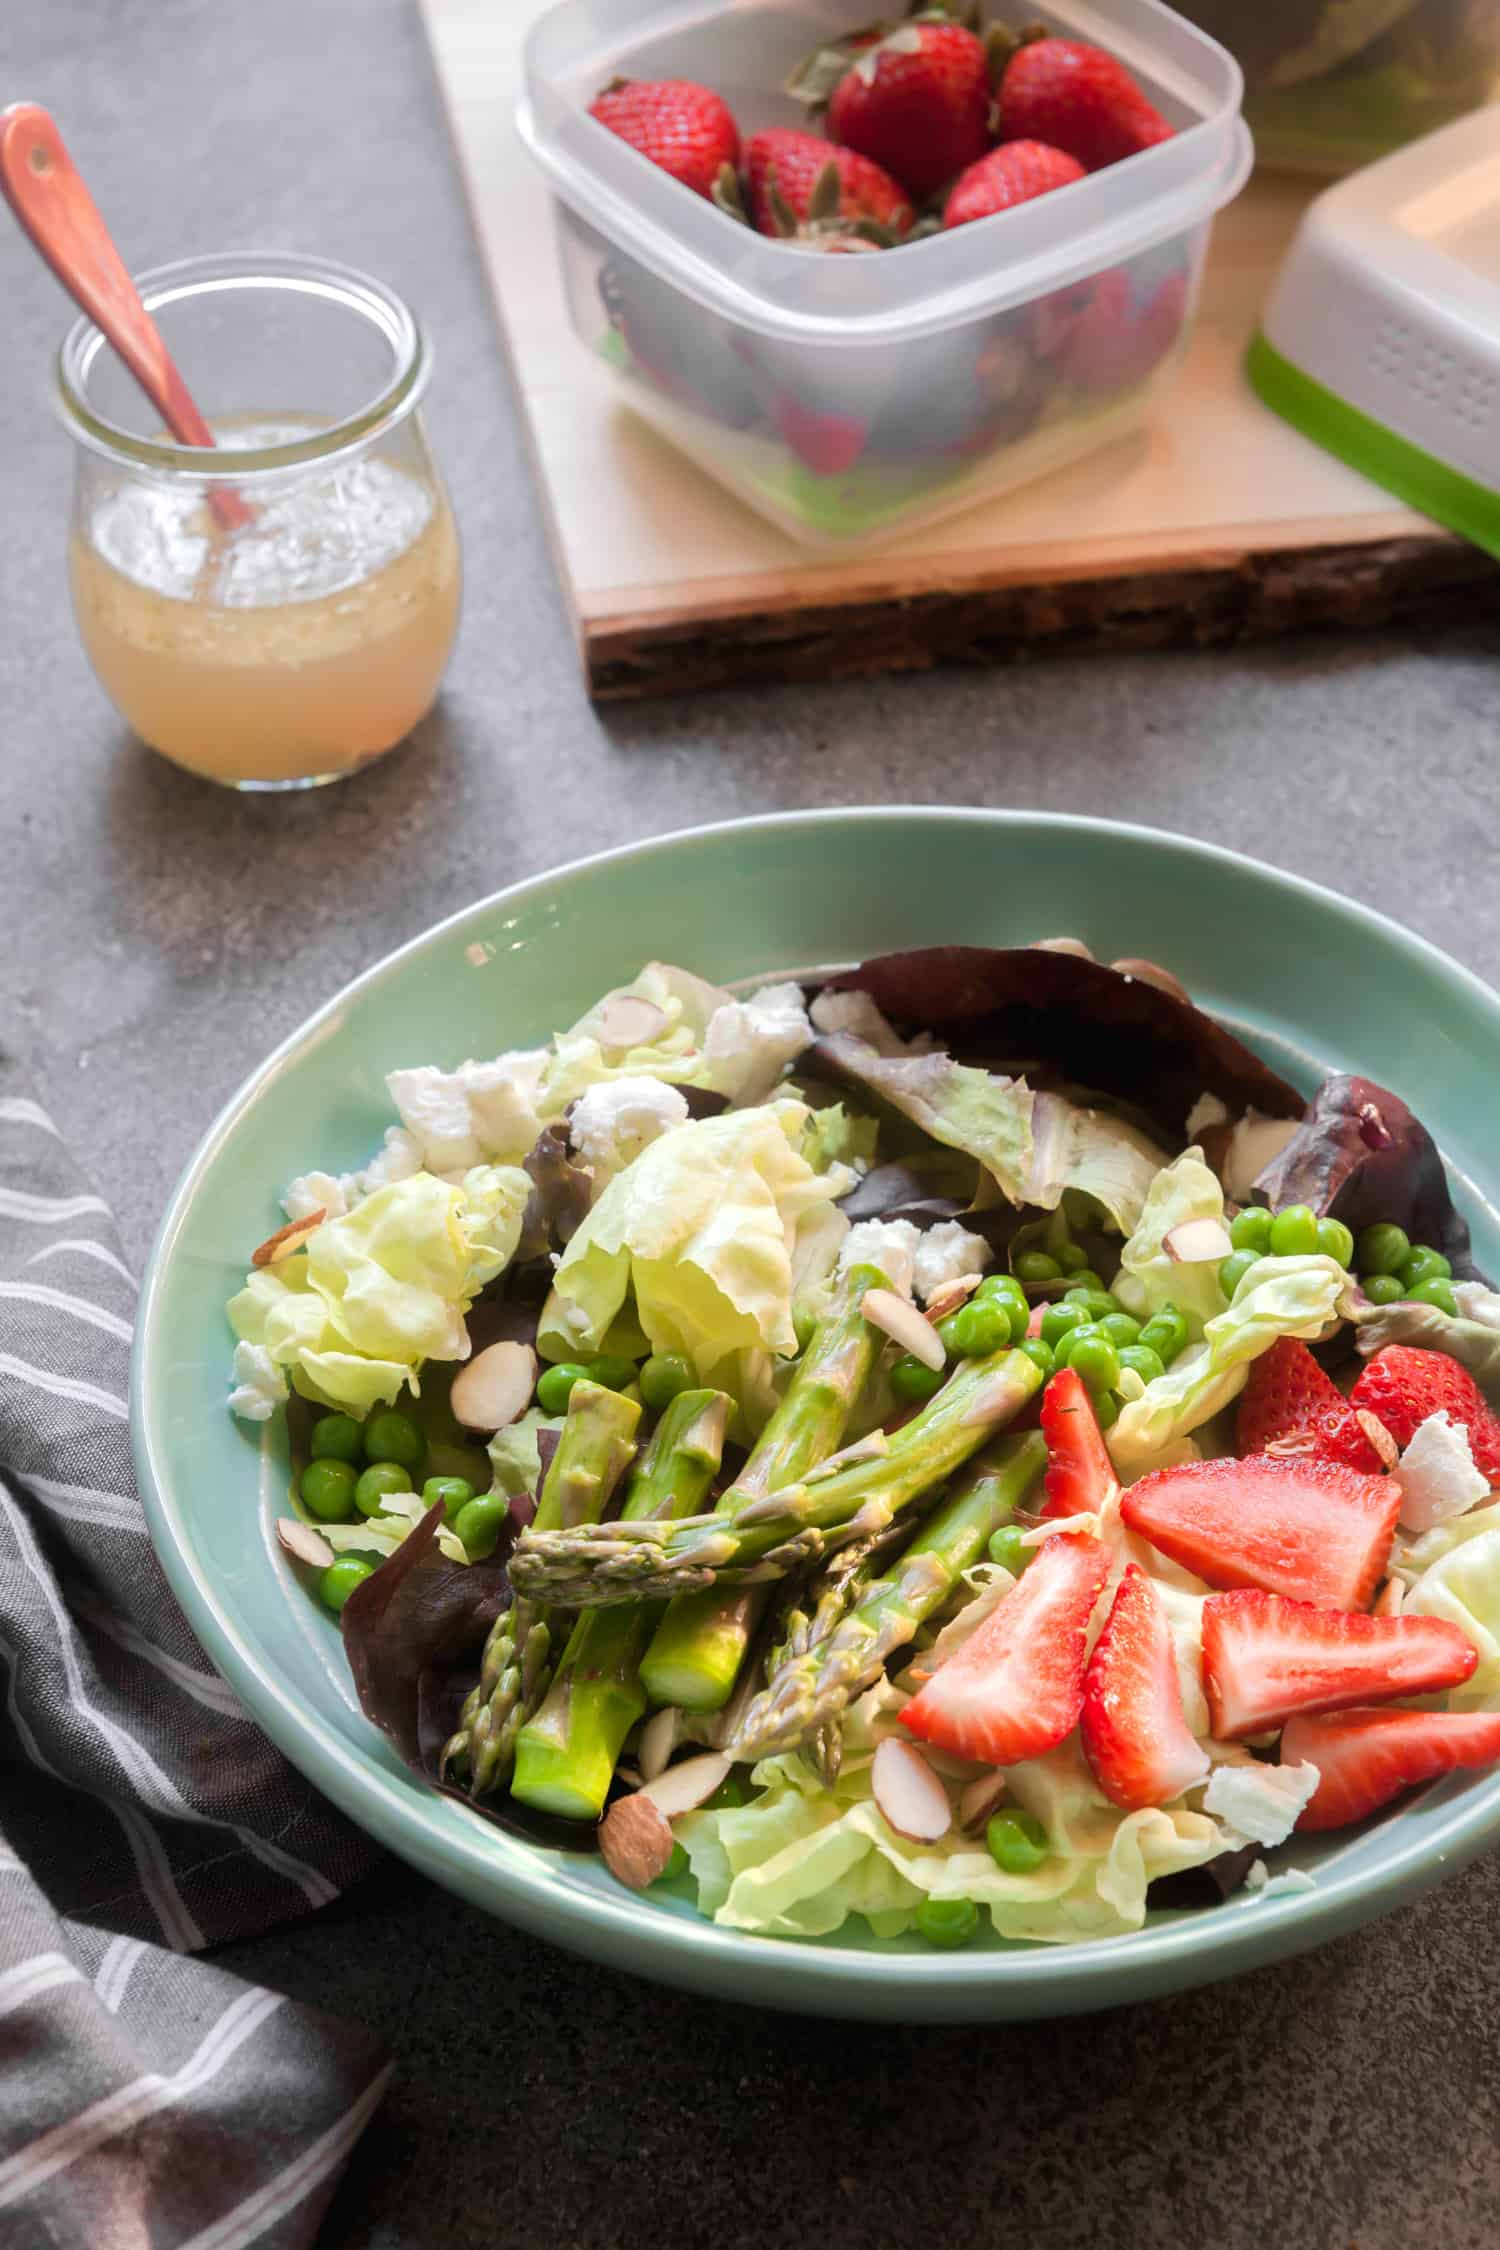 Strawberry and Asparagus Salad with Lemon Vinaigrette (Gluten Free)